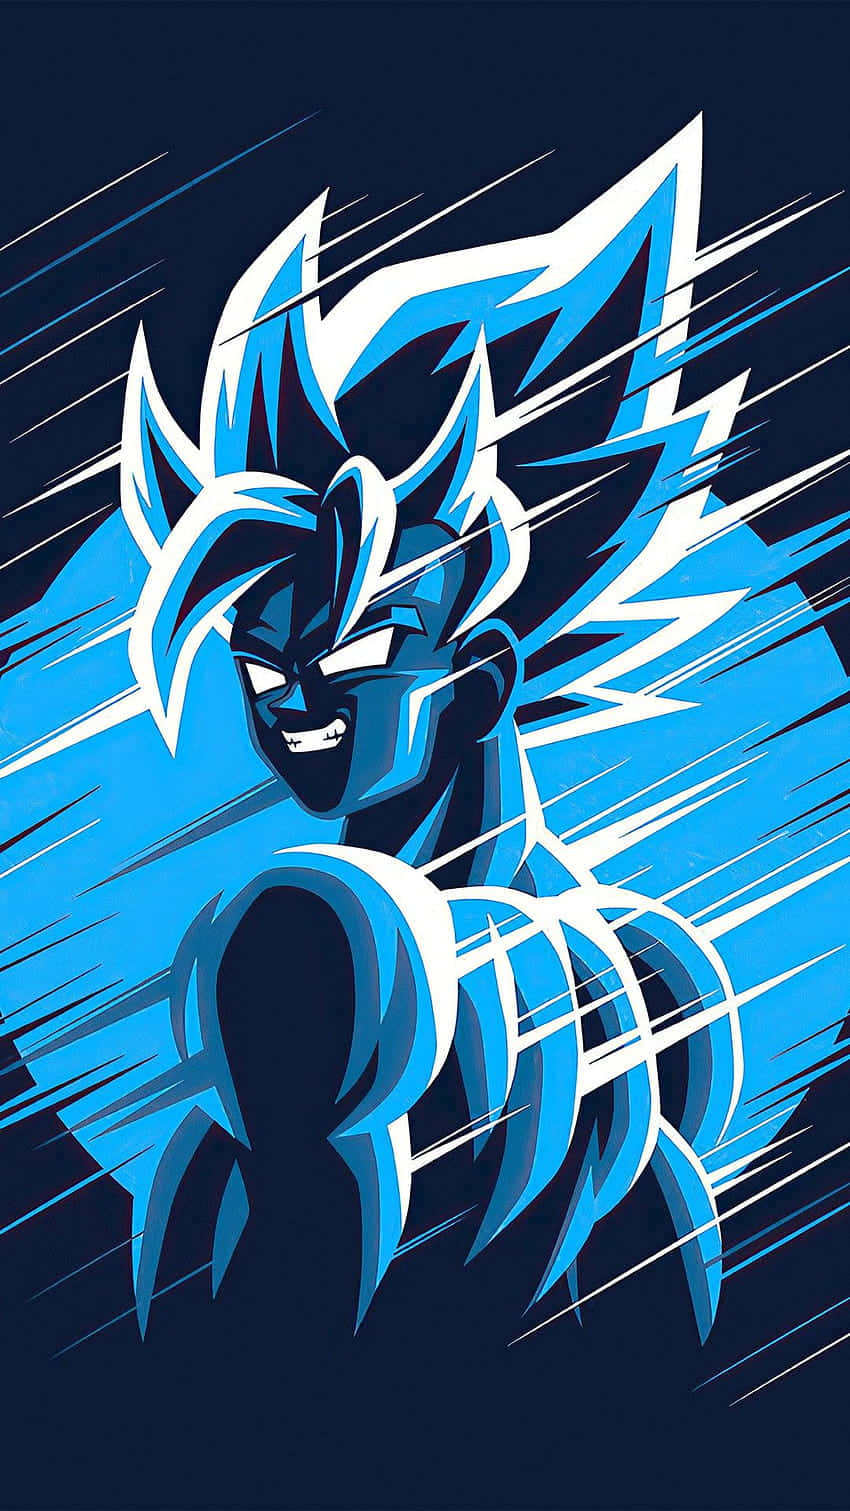 Imagende Goku En Azul Y Negro De Dragon Ball Z